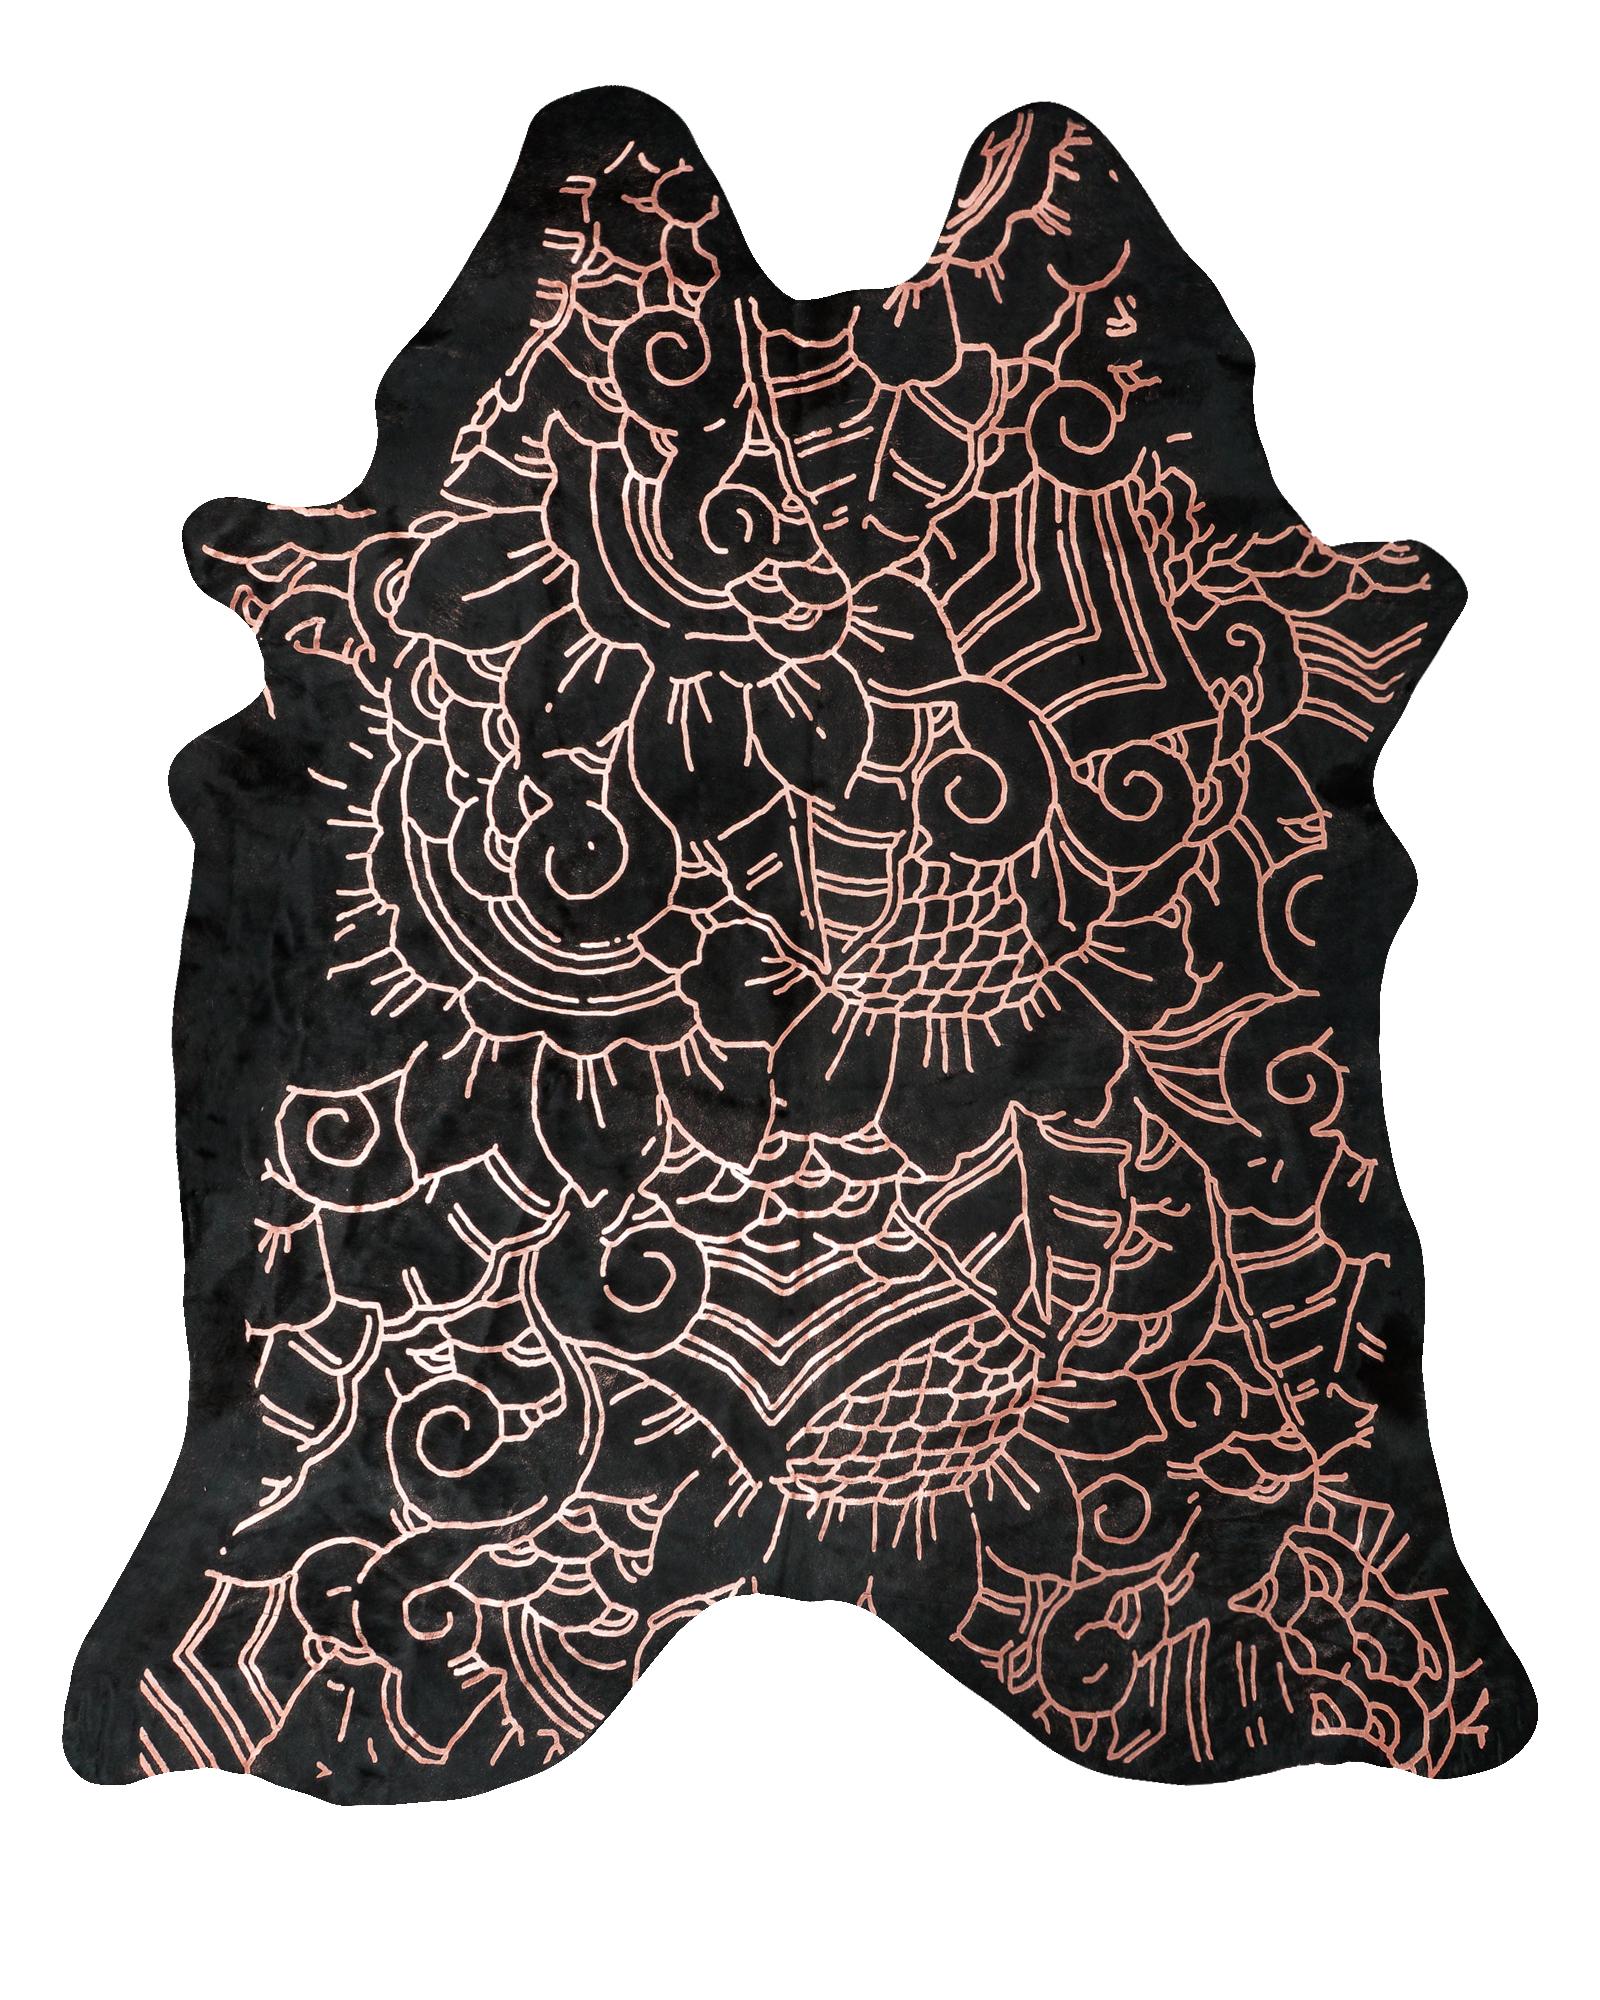 Art Deco Copper Metallic Boho Batik Pattern Black Cowhide Rug, Large For Sale